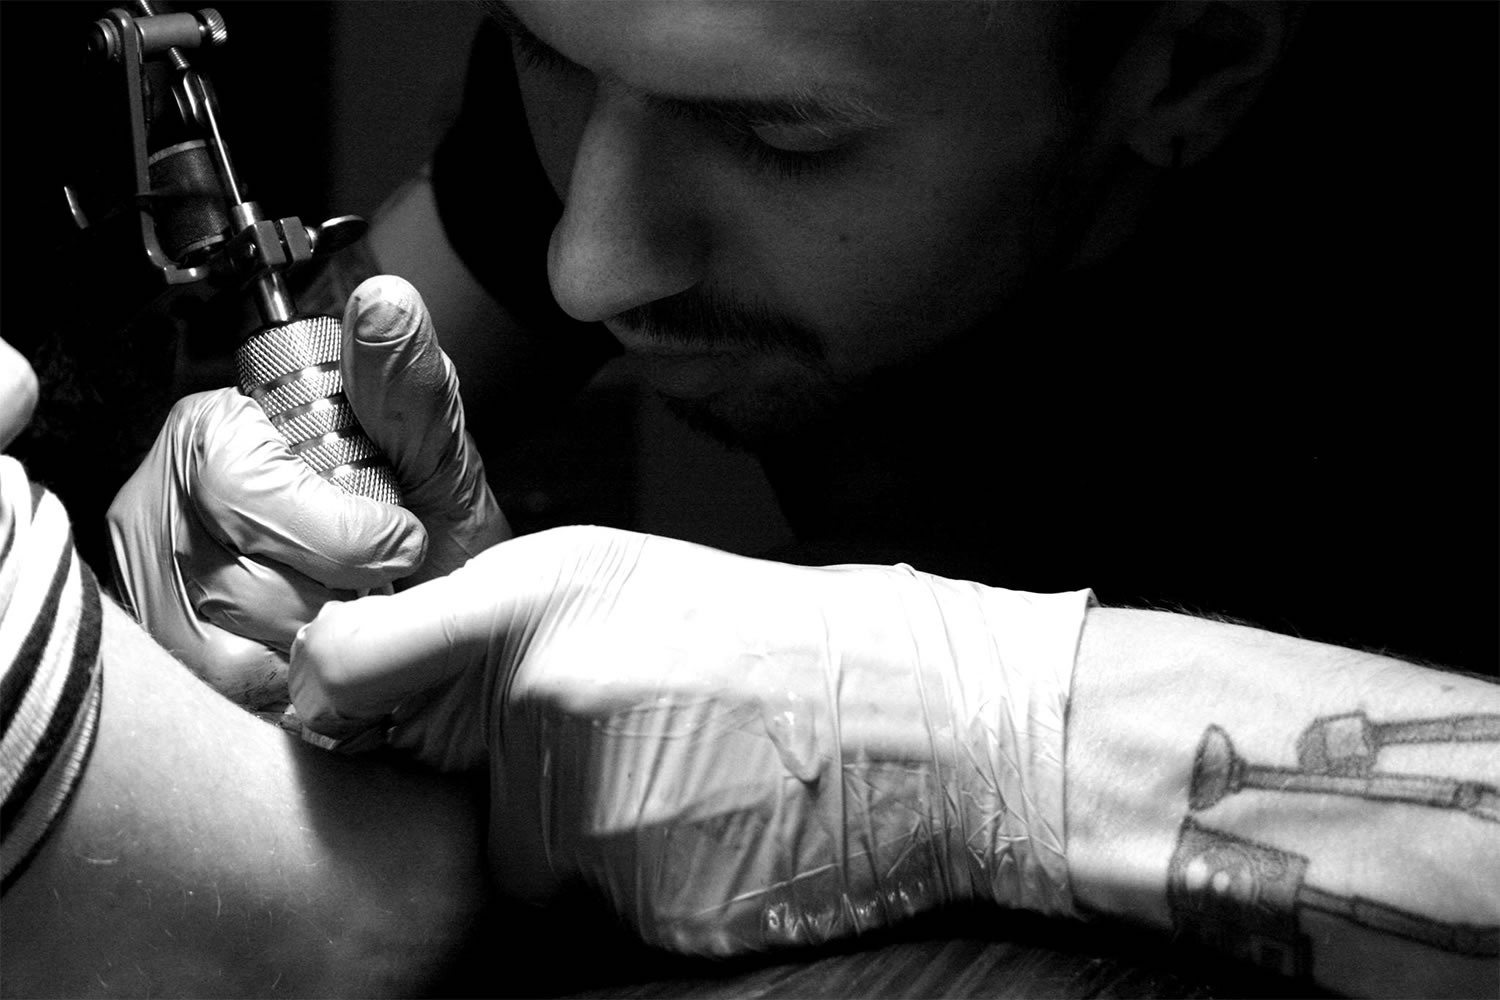 artist brezinski working on a tattoo